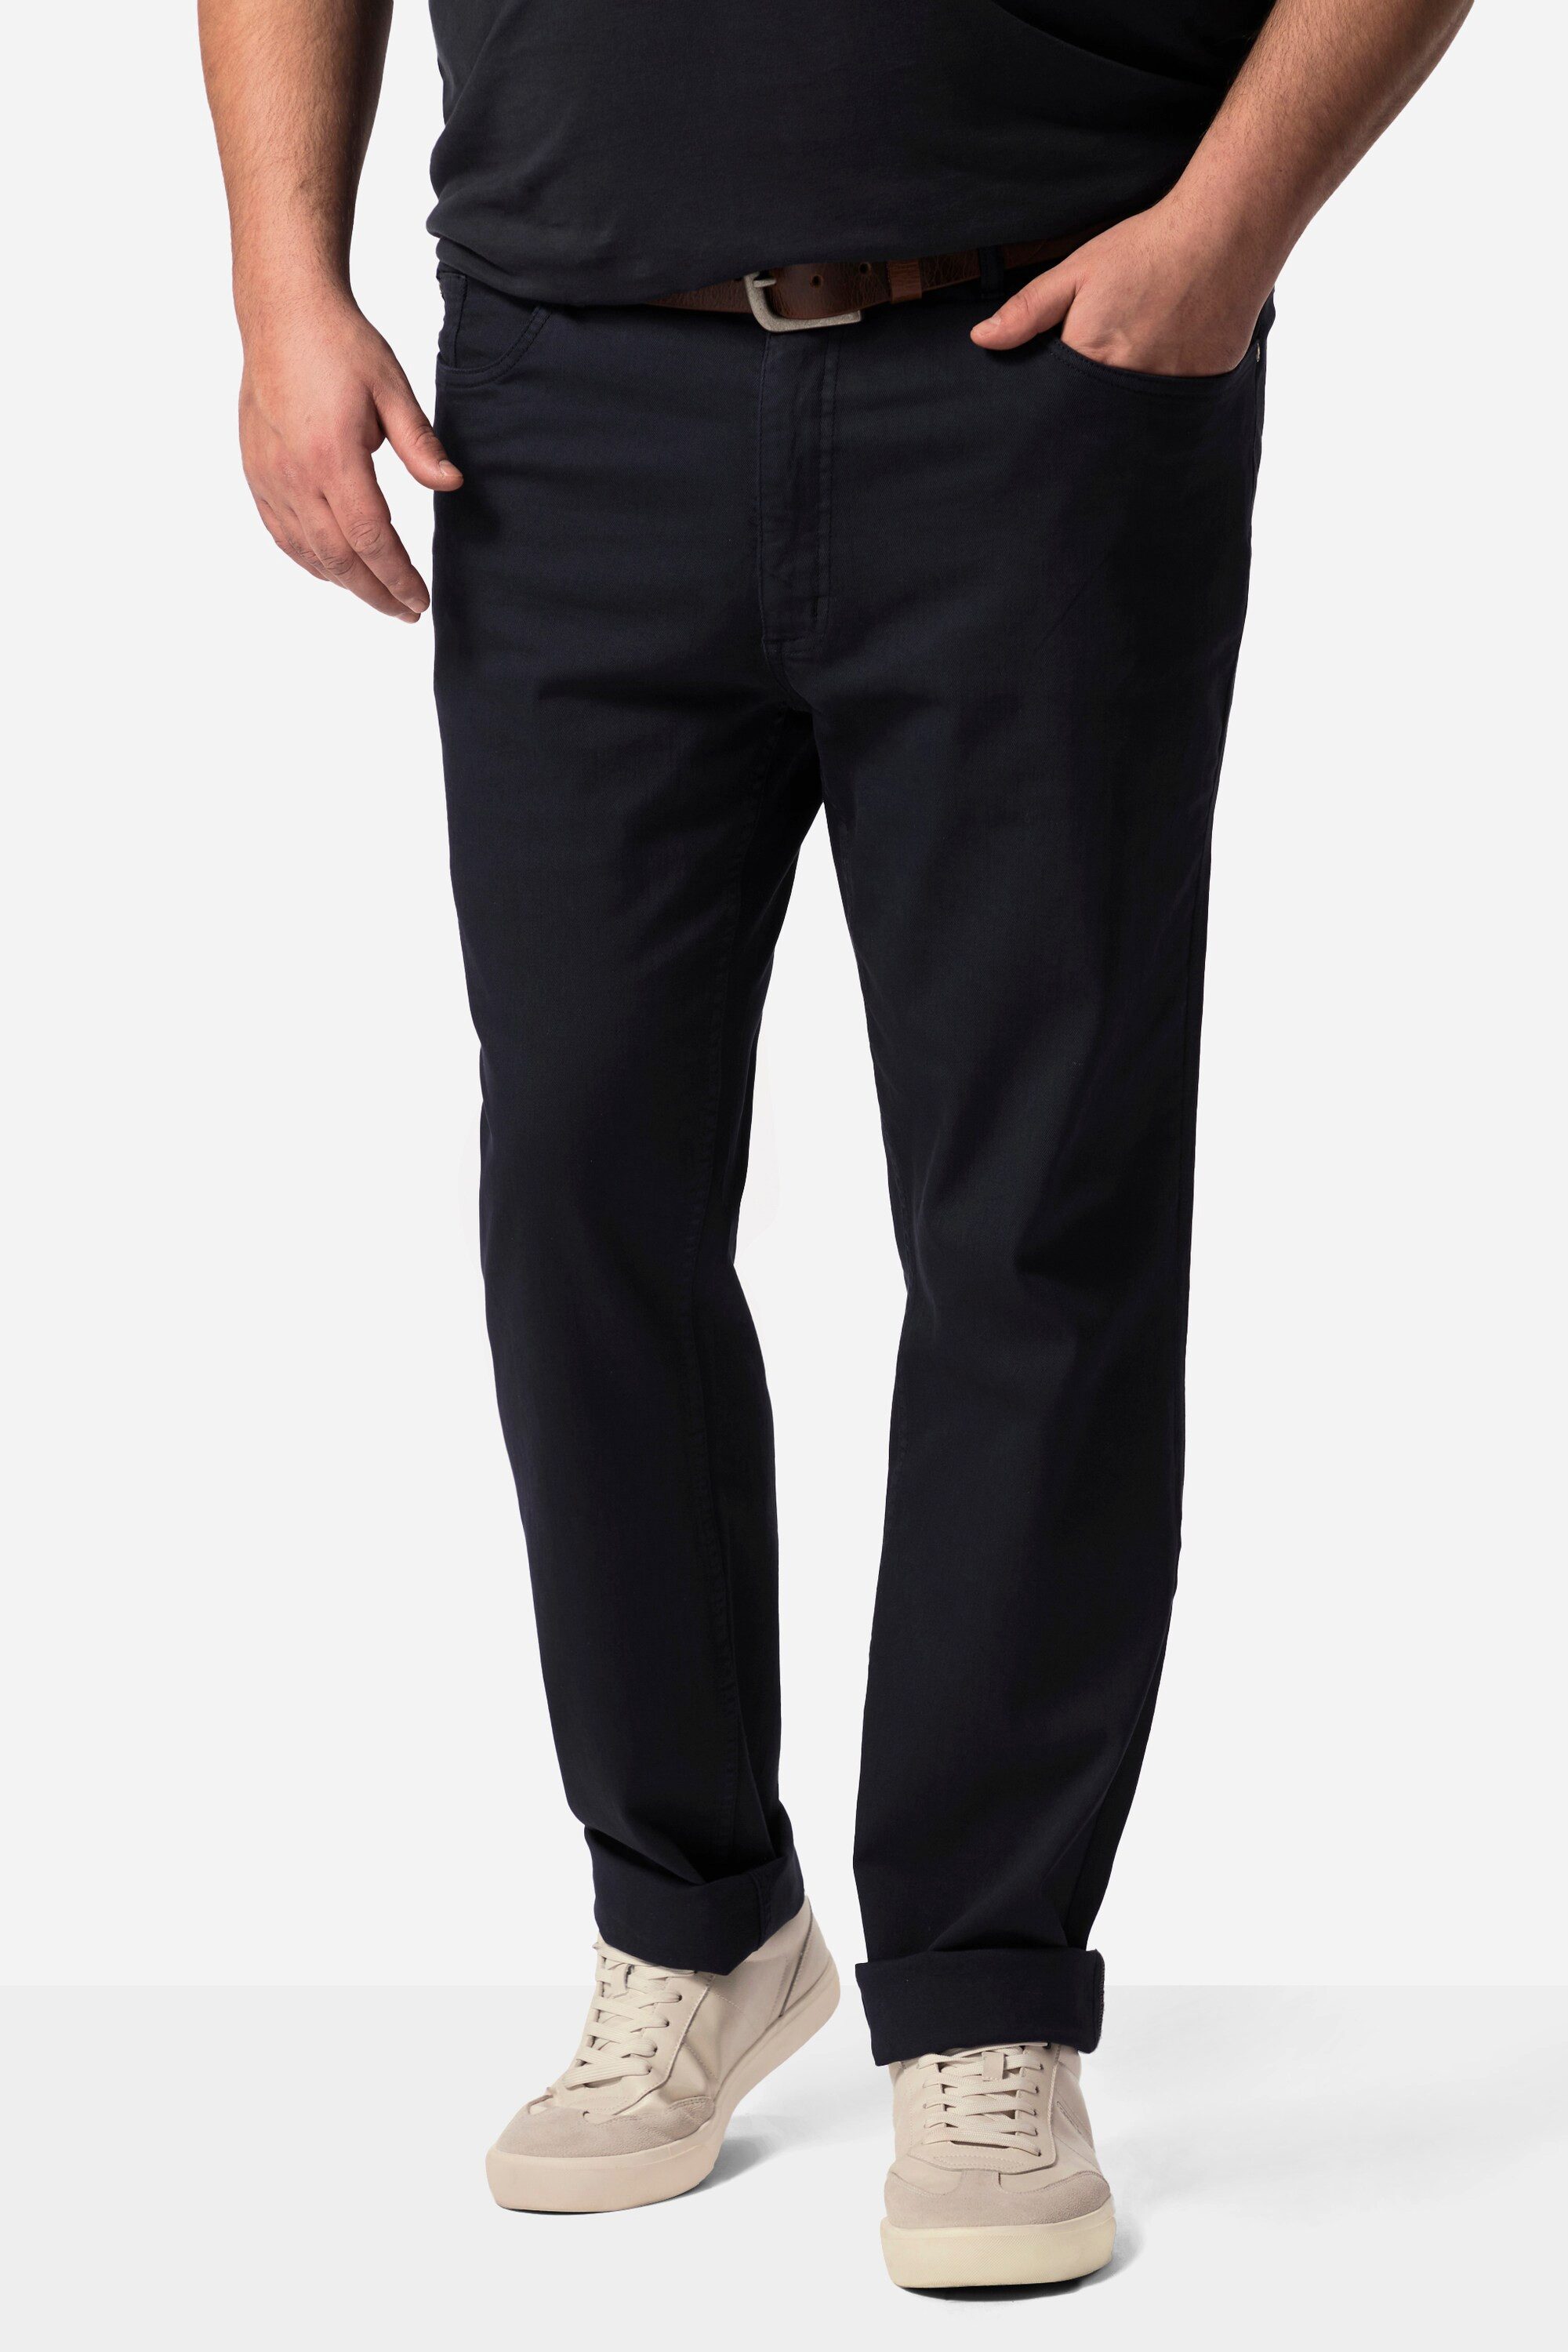 Men Plus Cargohose Men+ Jeans Colordenim 5-Pocket bis 72